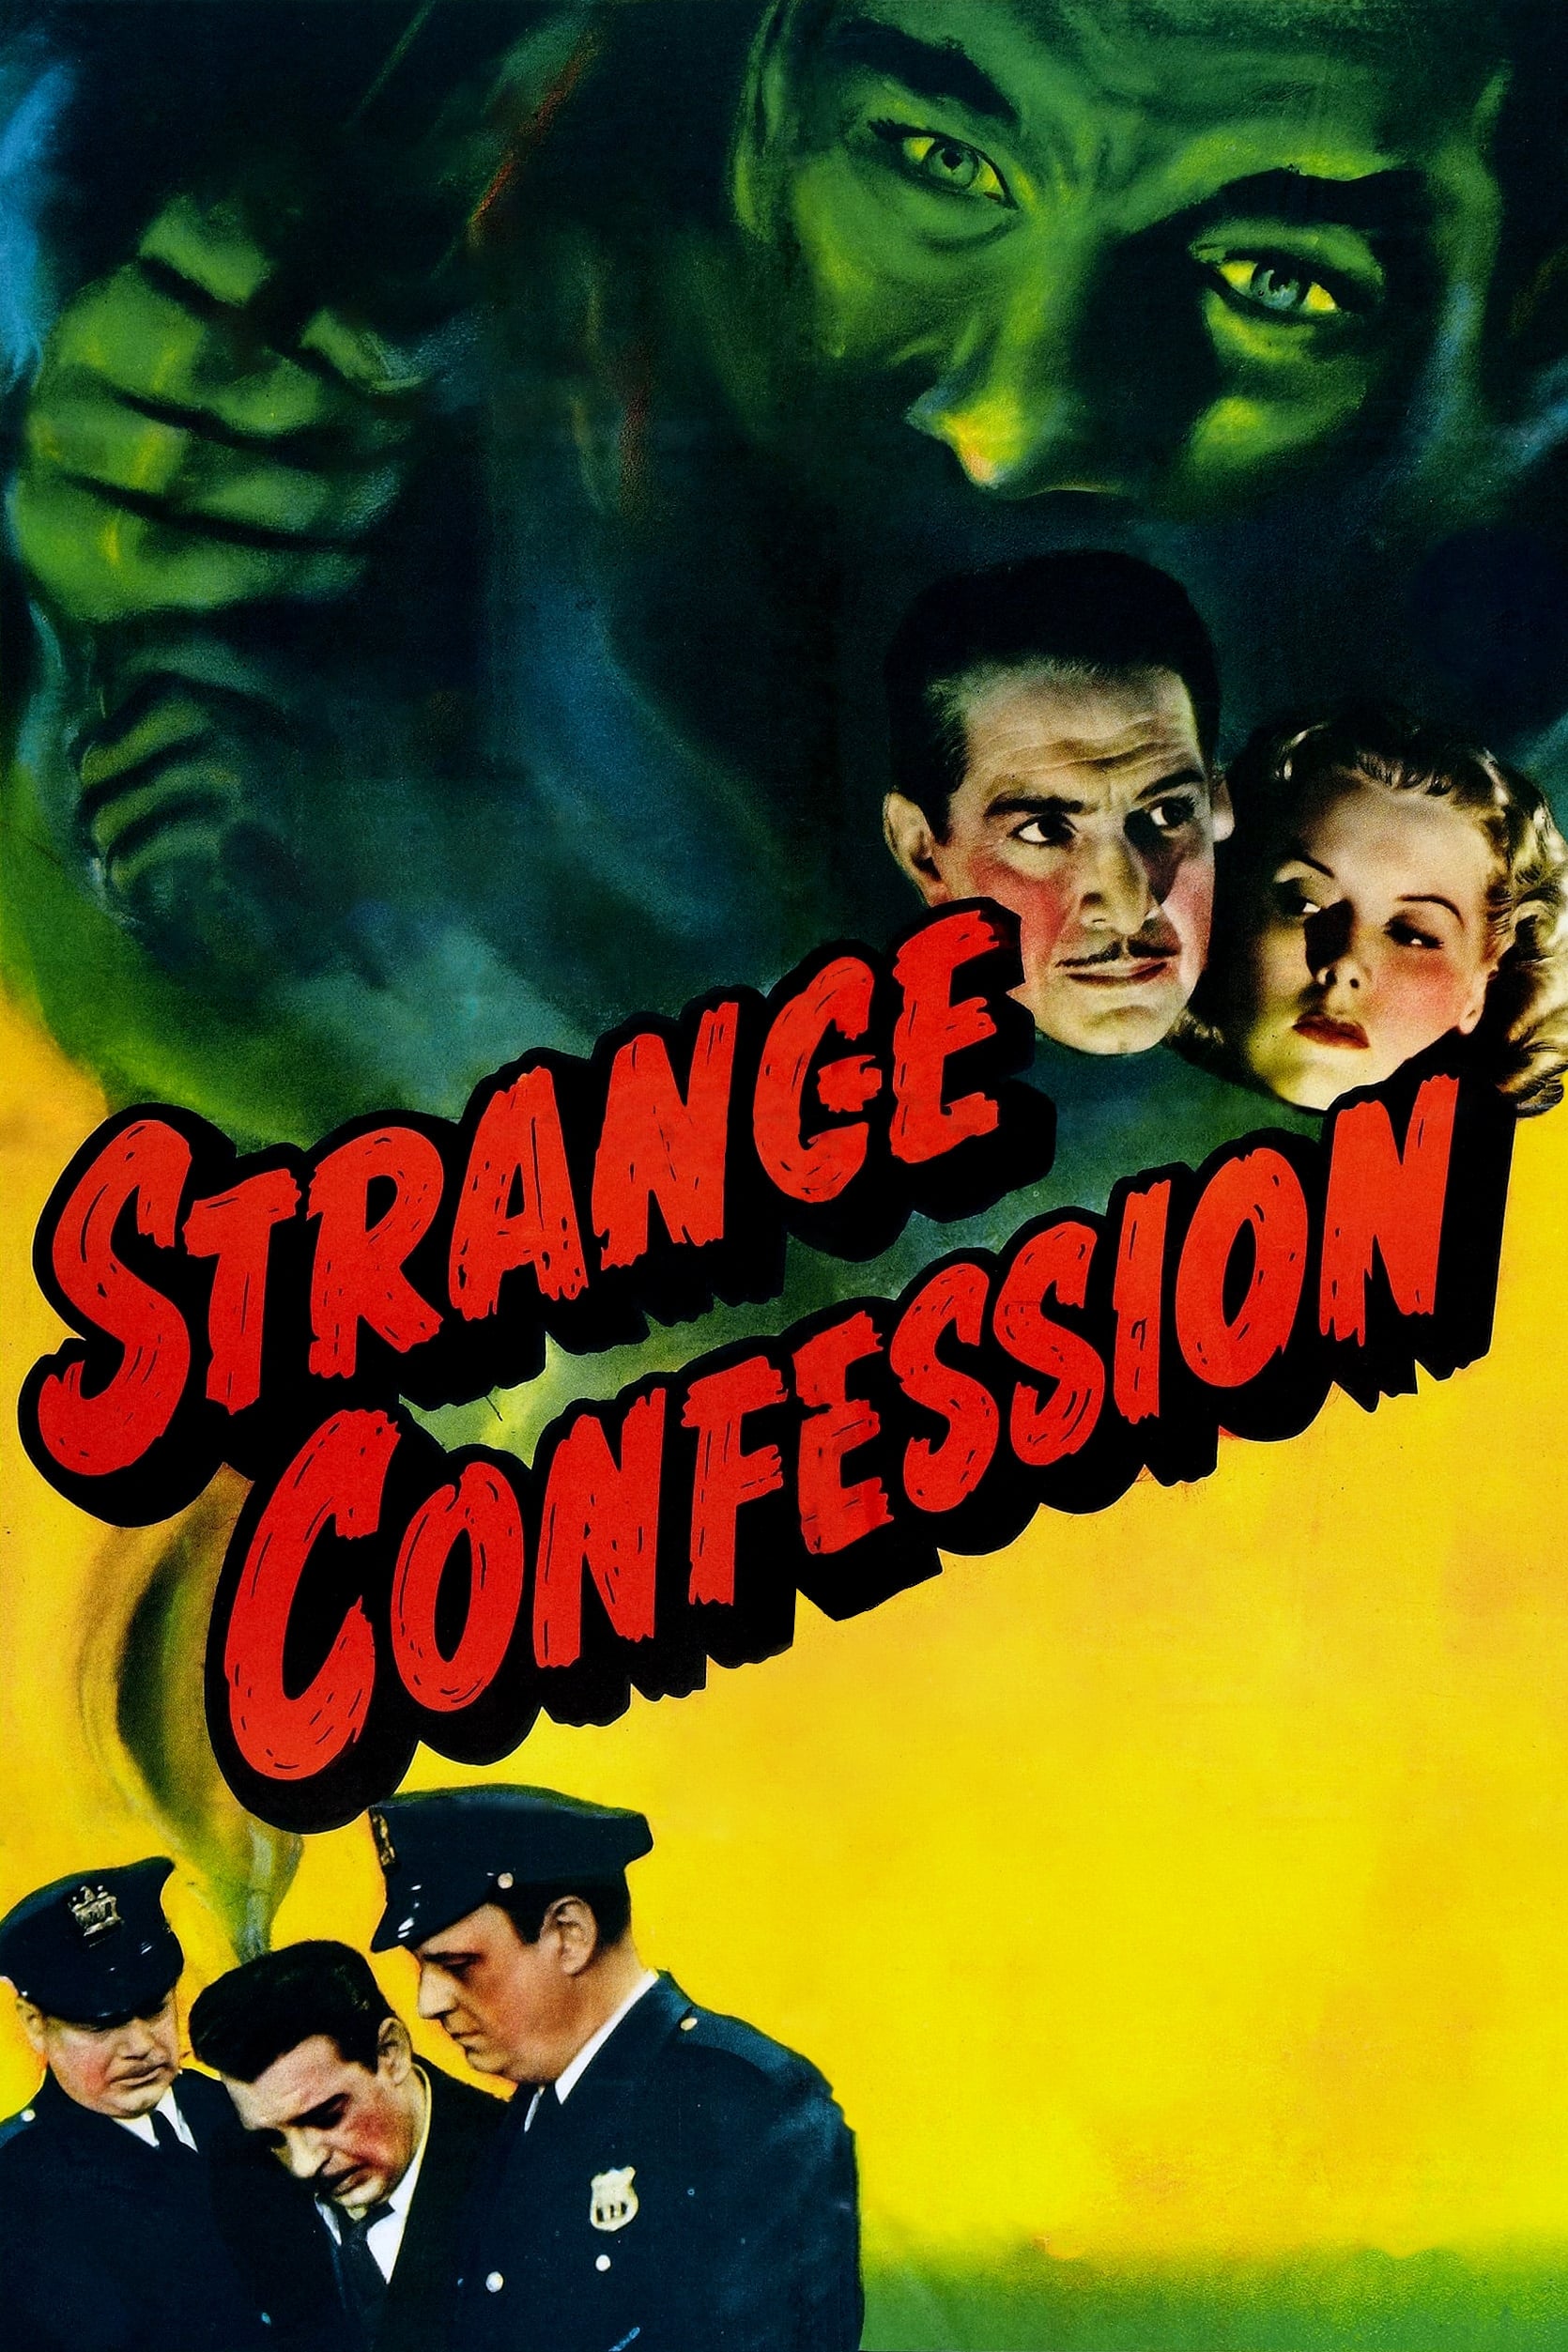 Strange Confession (1945)